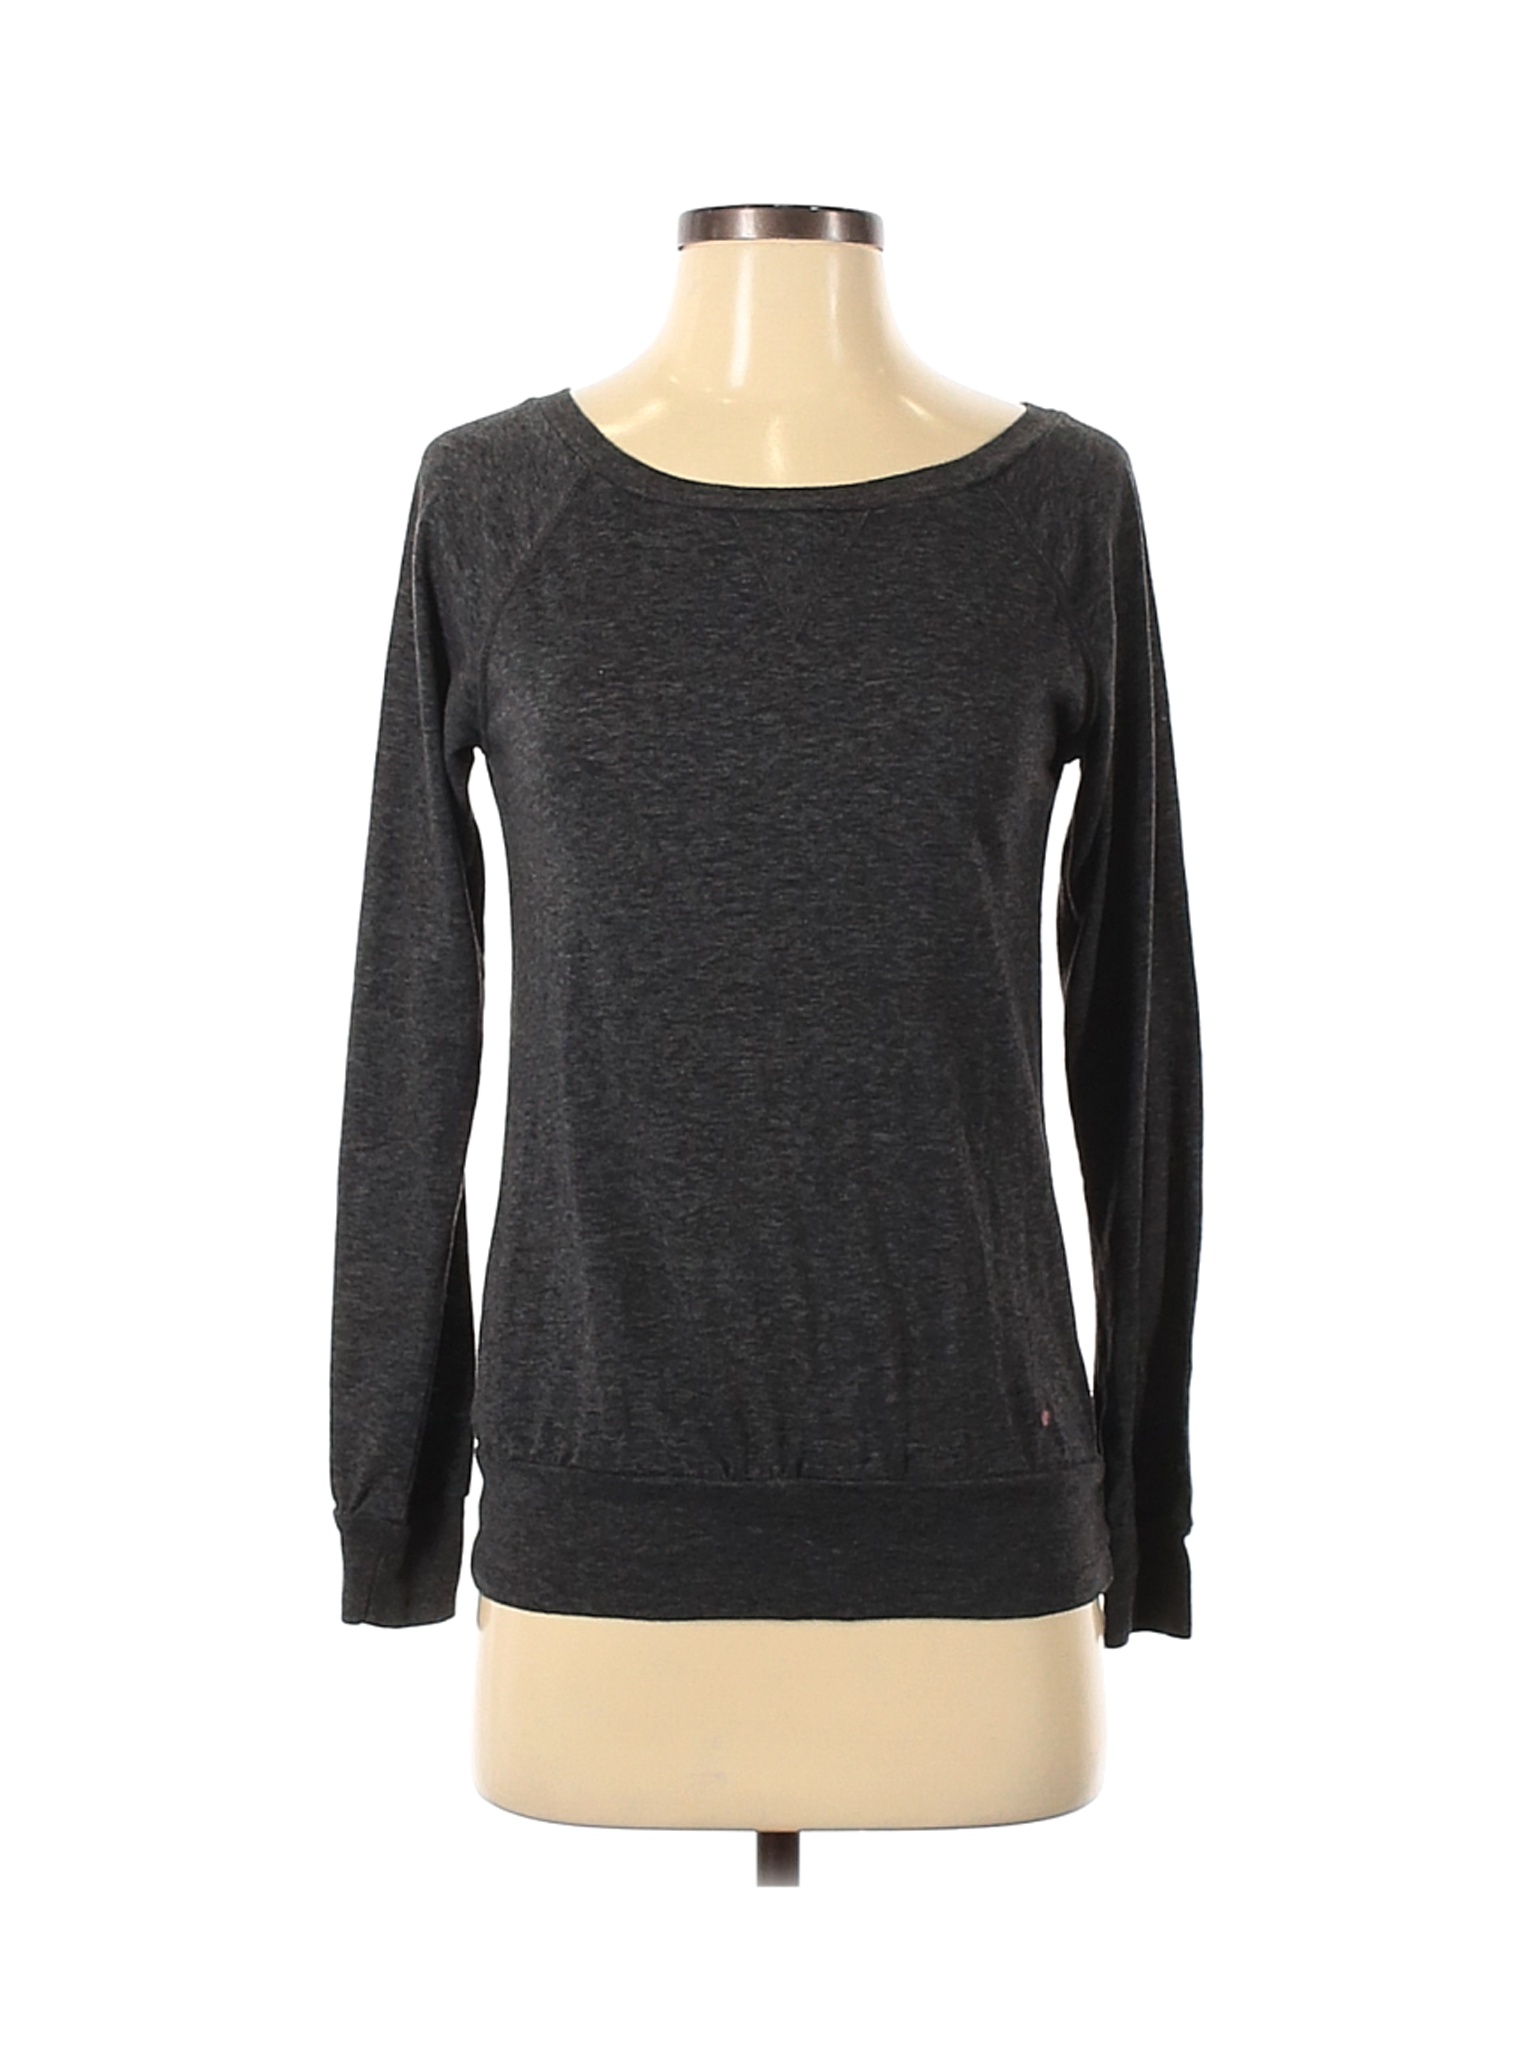 Mossimo Supply Co. Women Gray Pullover Sweater XS | eBay